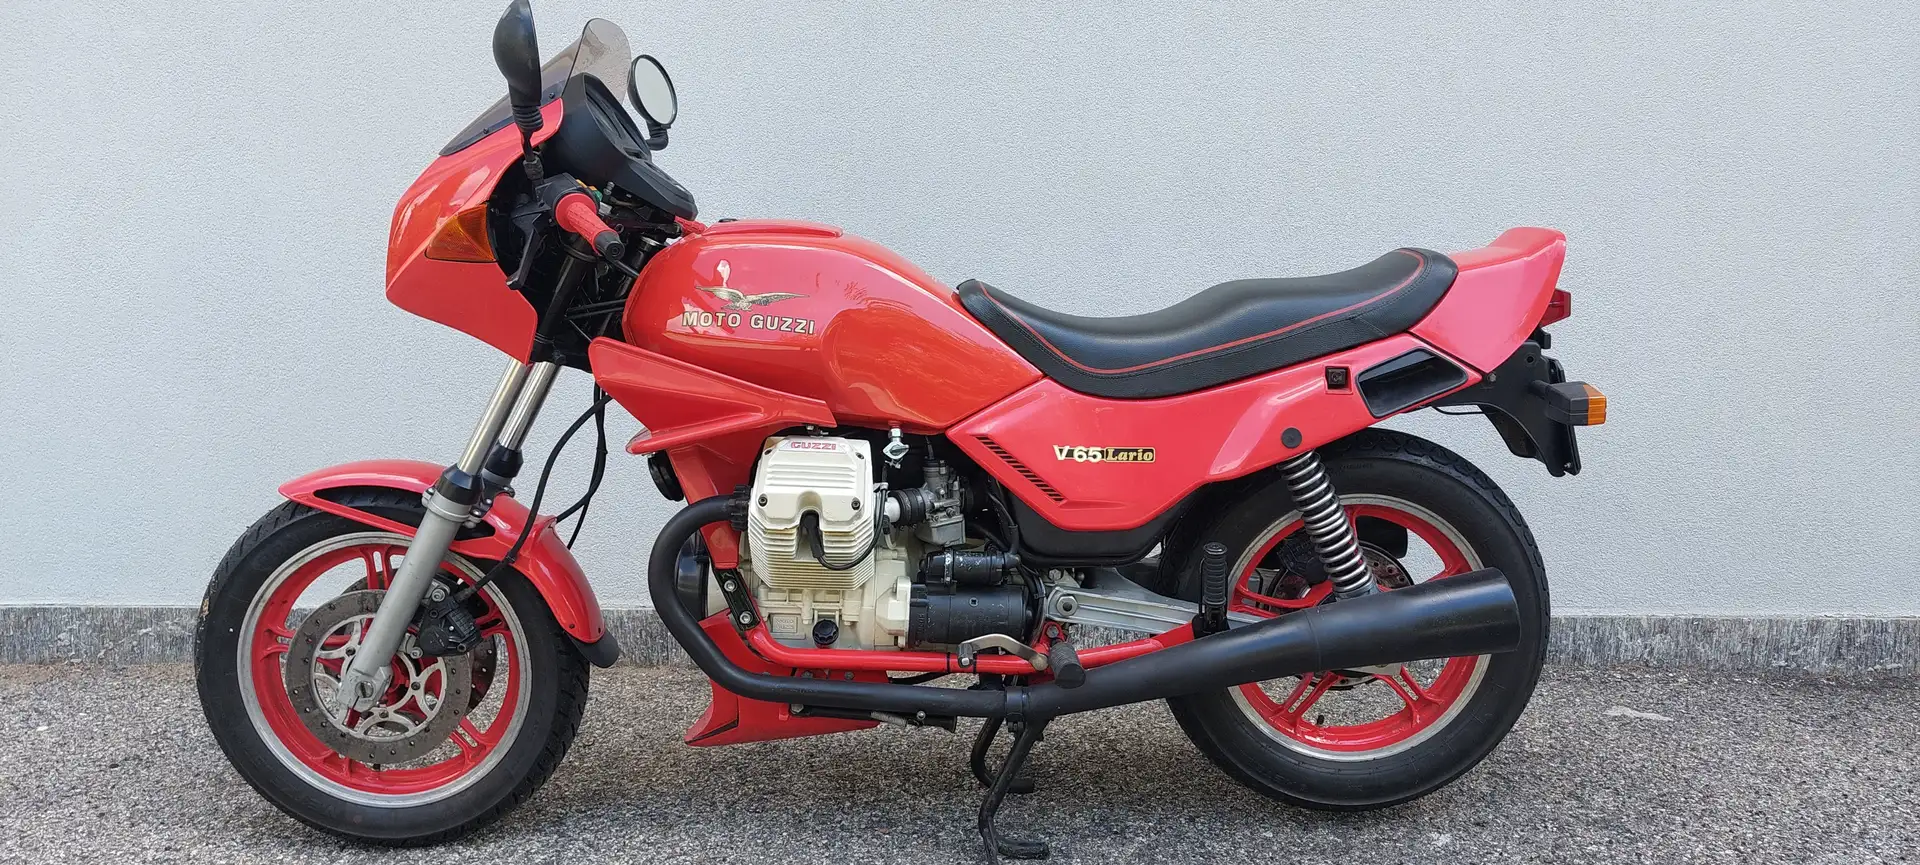 Moto Guzzi V 65 Lario Rood - 2